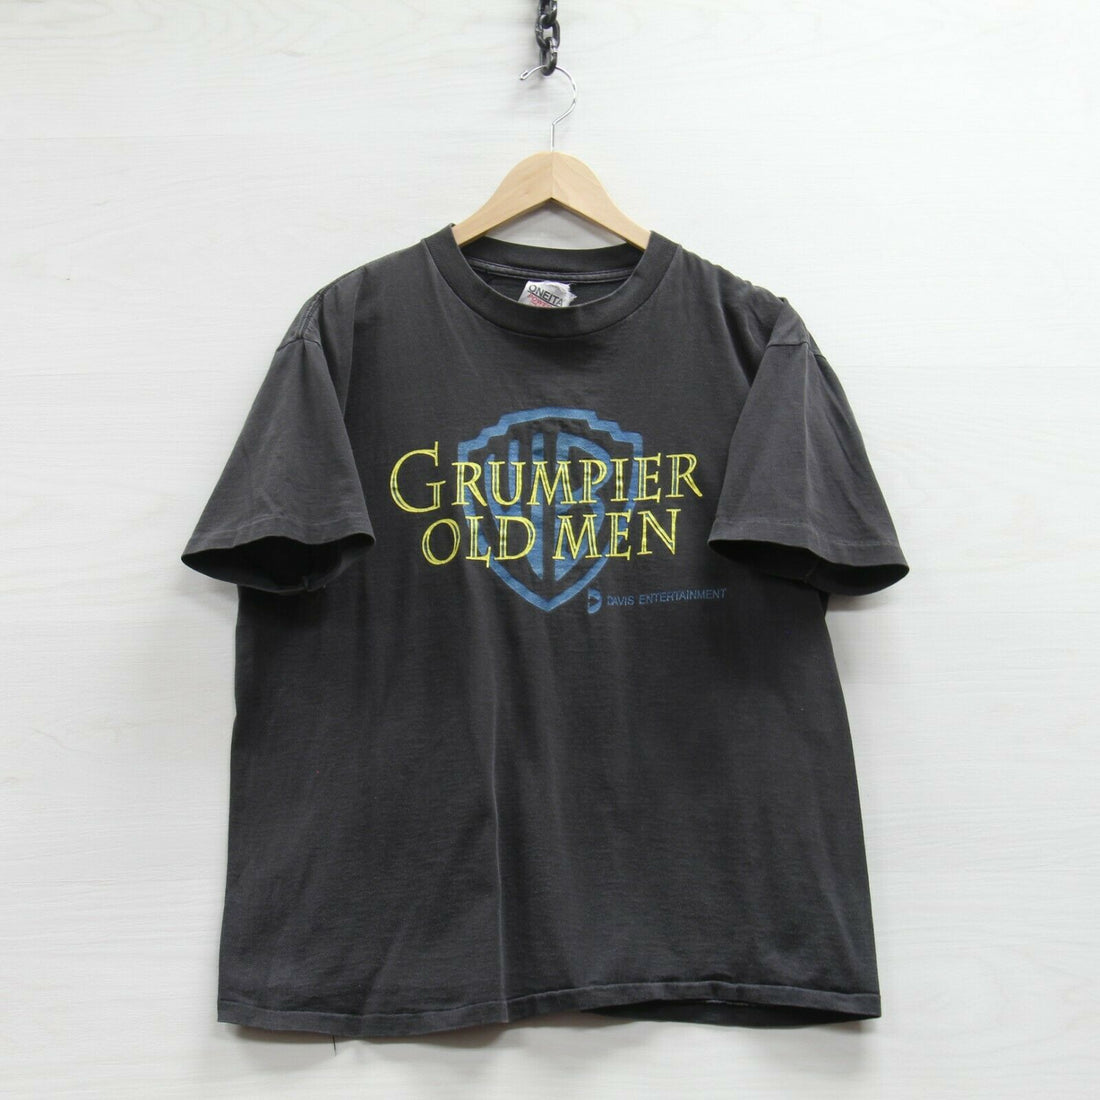 Vintage Grumpier Old Men T-Shirt Size Large 90s Warner Bros Movie Promo